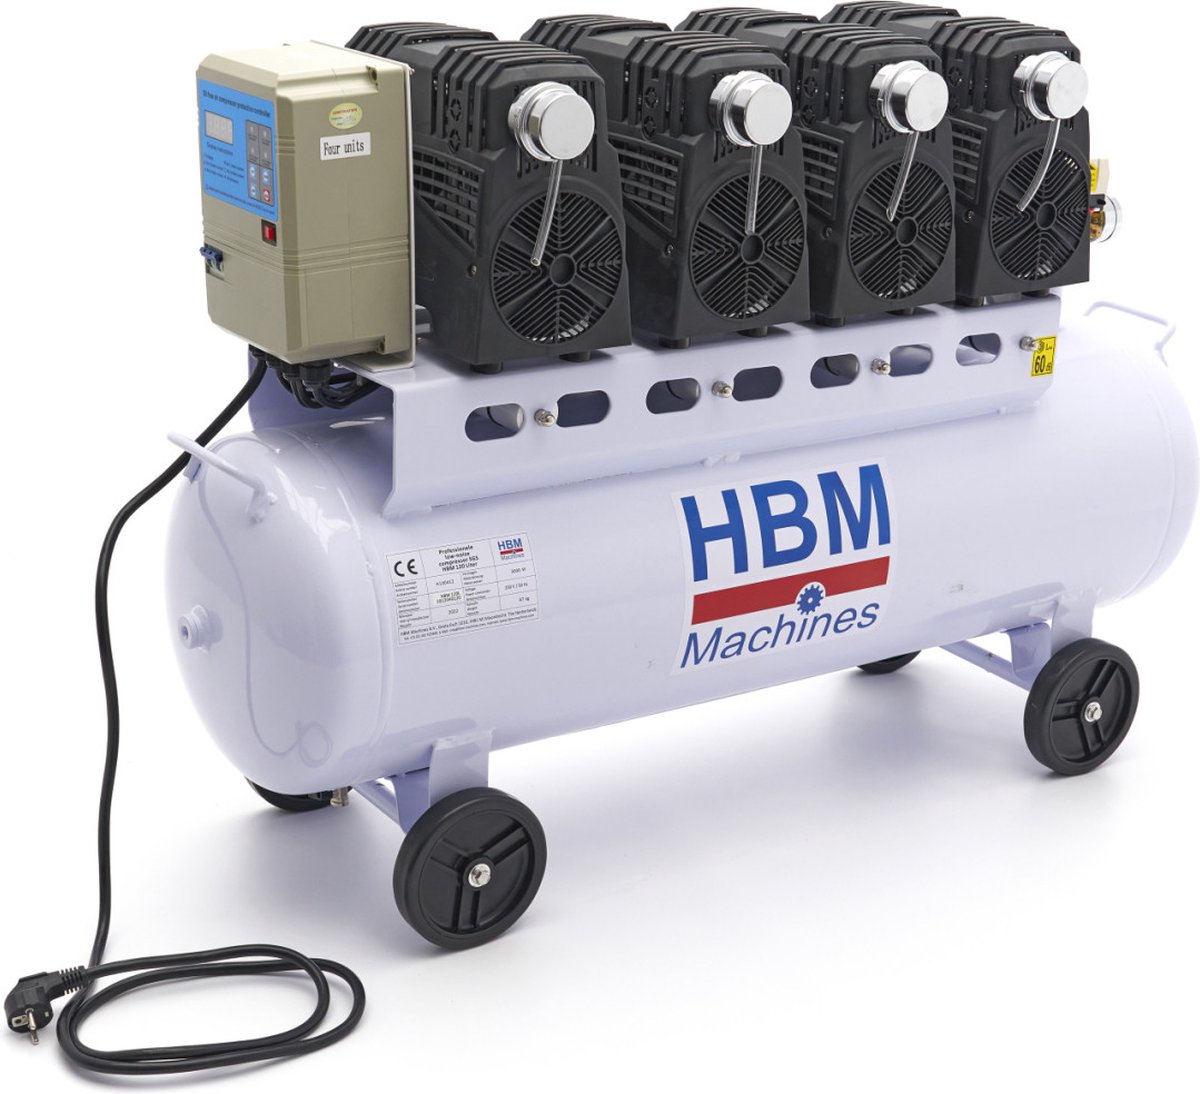 HBM machines 120 Liter Professionele Low Noise Compressor 400 liter per minuut